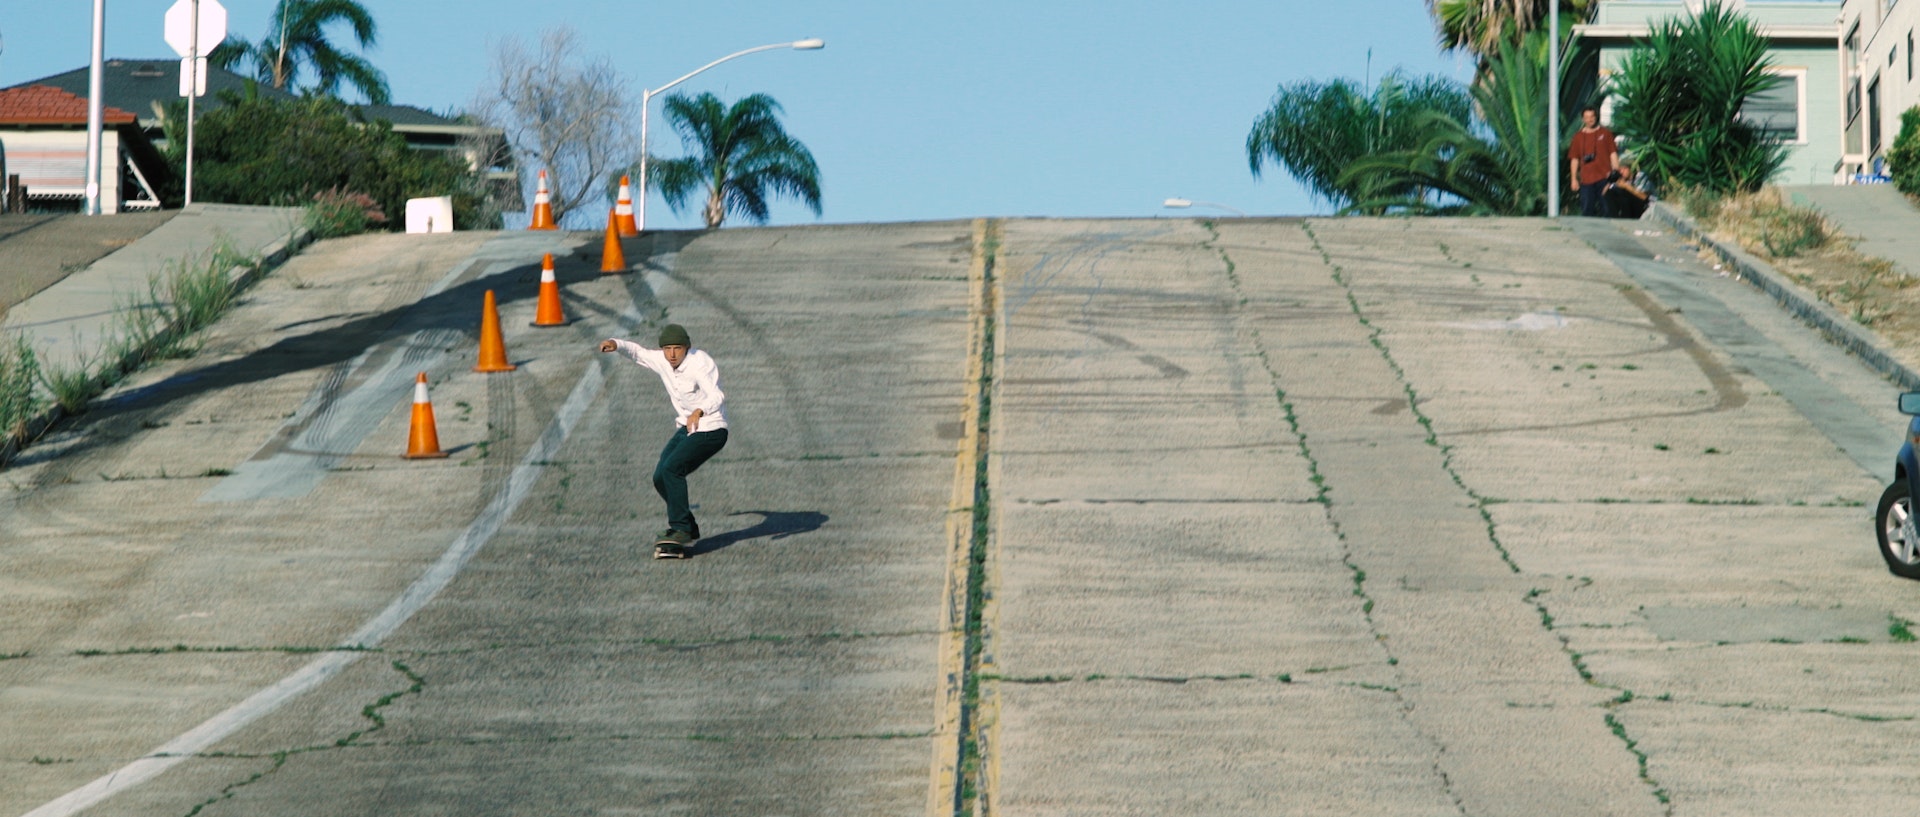 San Diego skater Marius Syvanen shows us his hometown's hidden corners